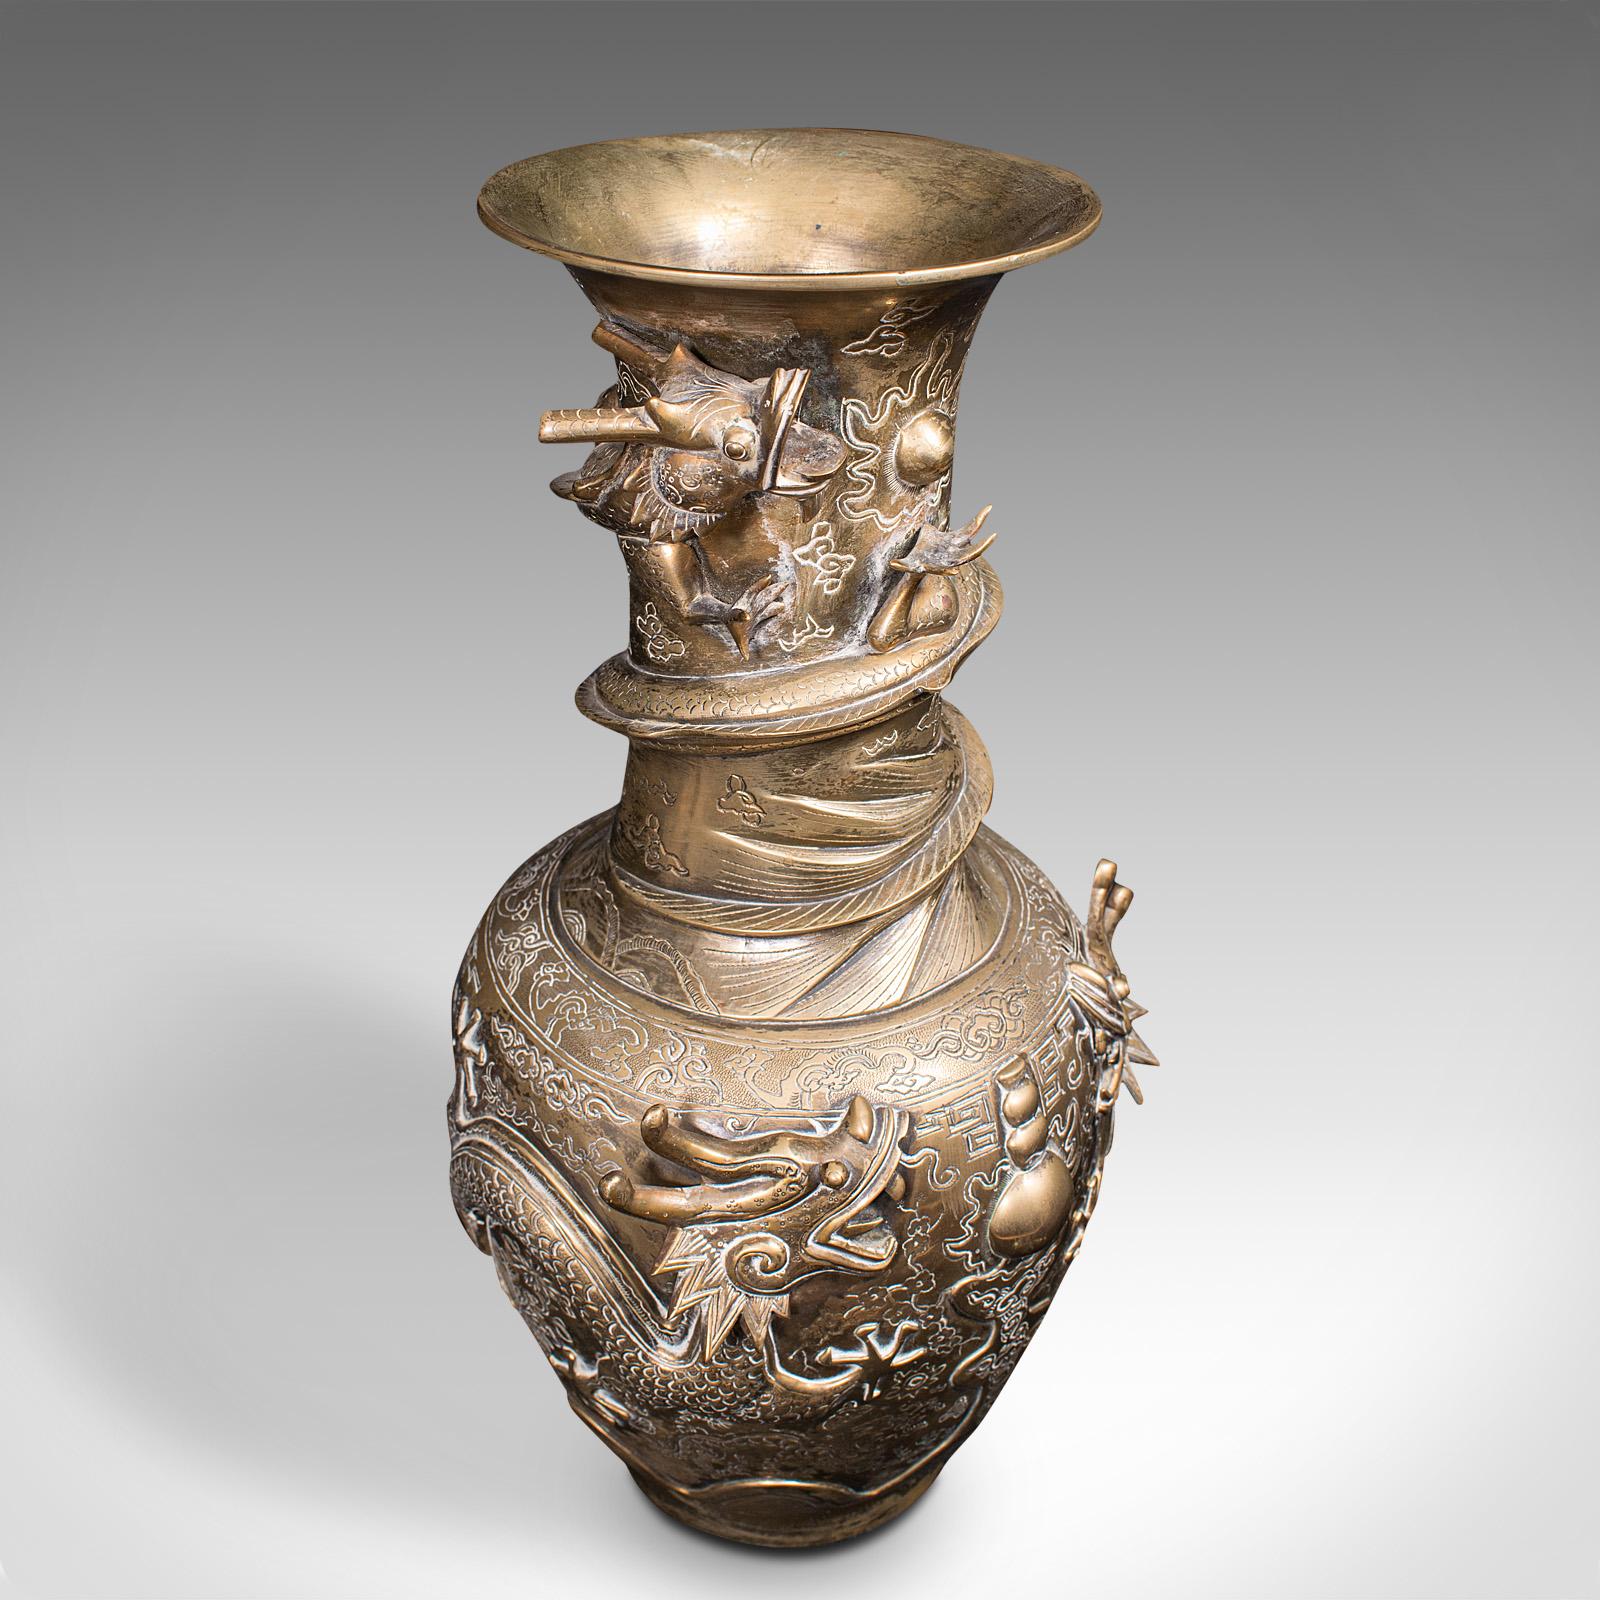 19th Century Pair of Tall Antique Dragon Vases, Chinese, Brass, Decorative, Oriental Taste